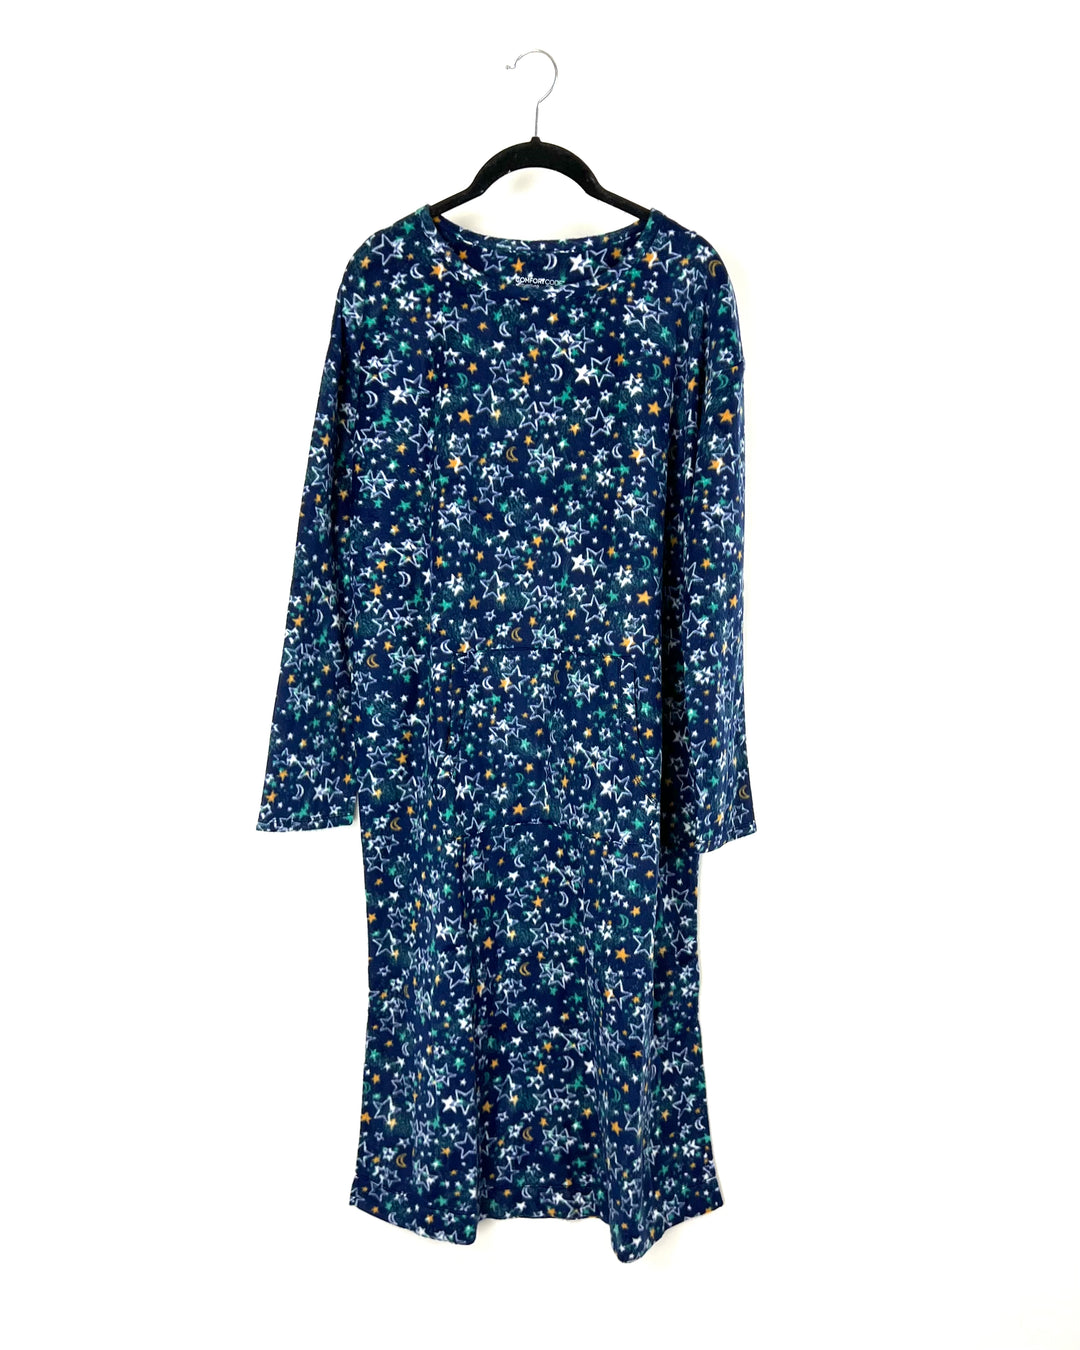 Navy Blue Star Nightgown - Small/Medium